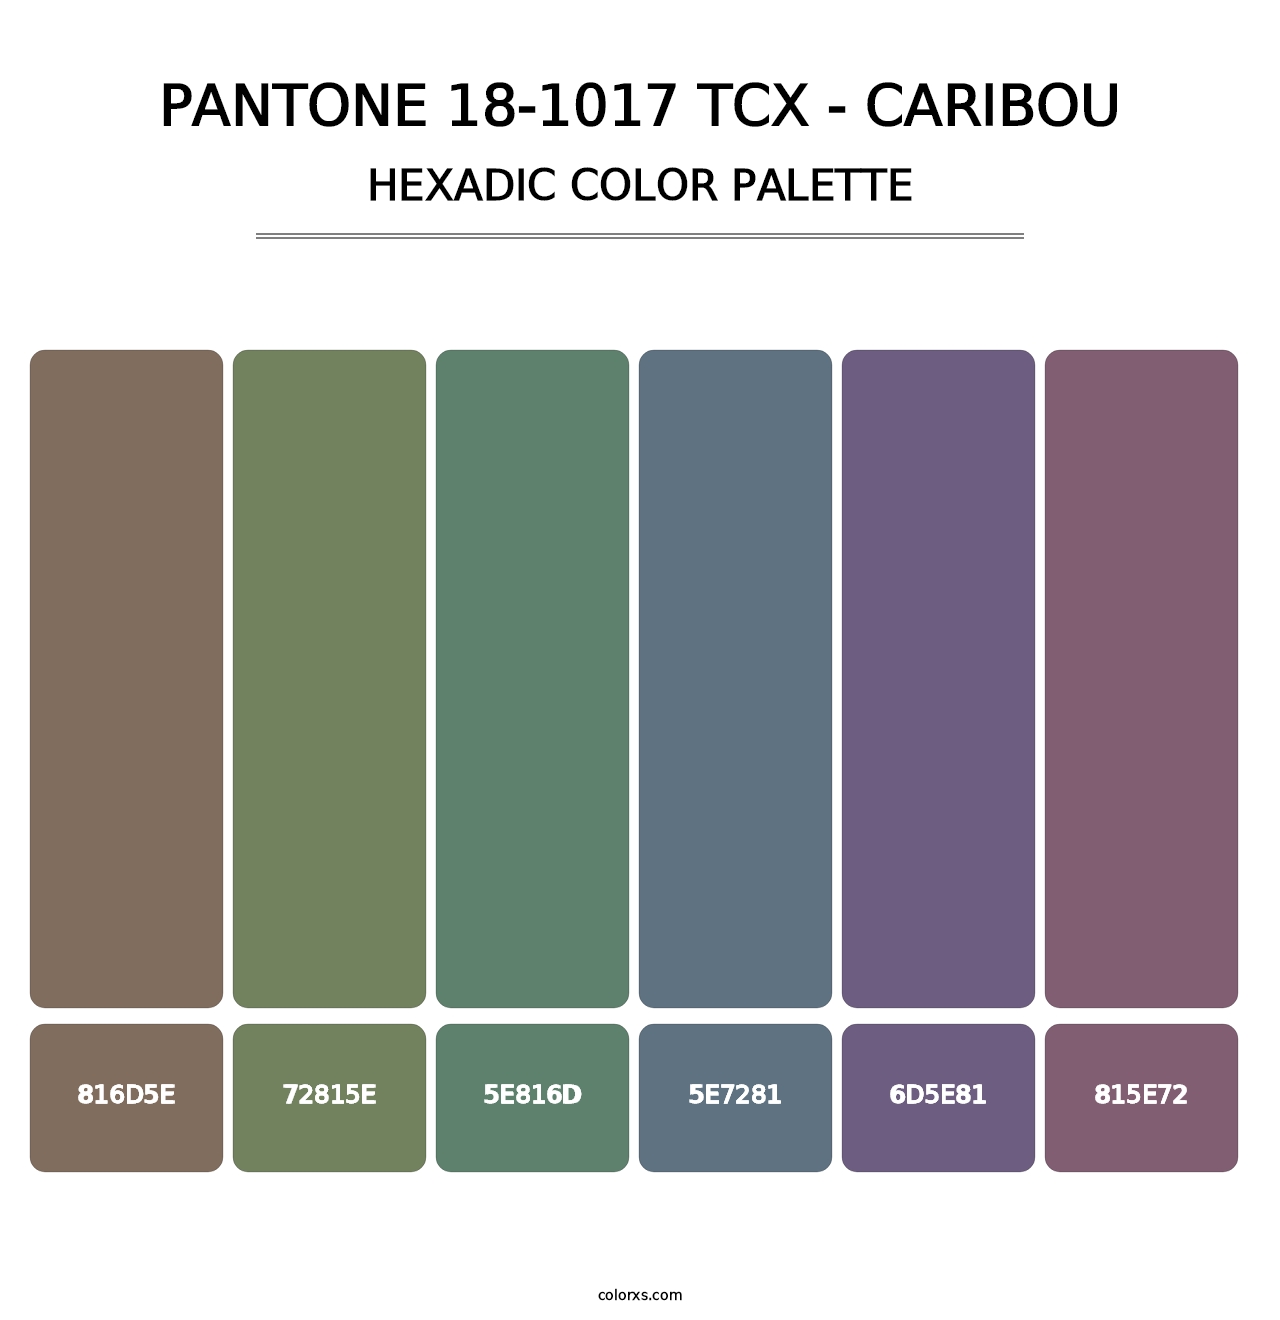 PANTONE 18-1017 TCX - Caribou - Hexadic Color Palette